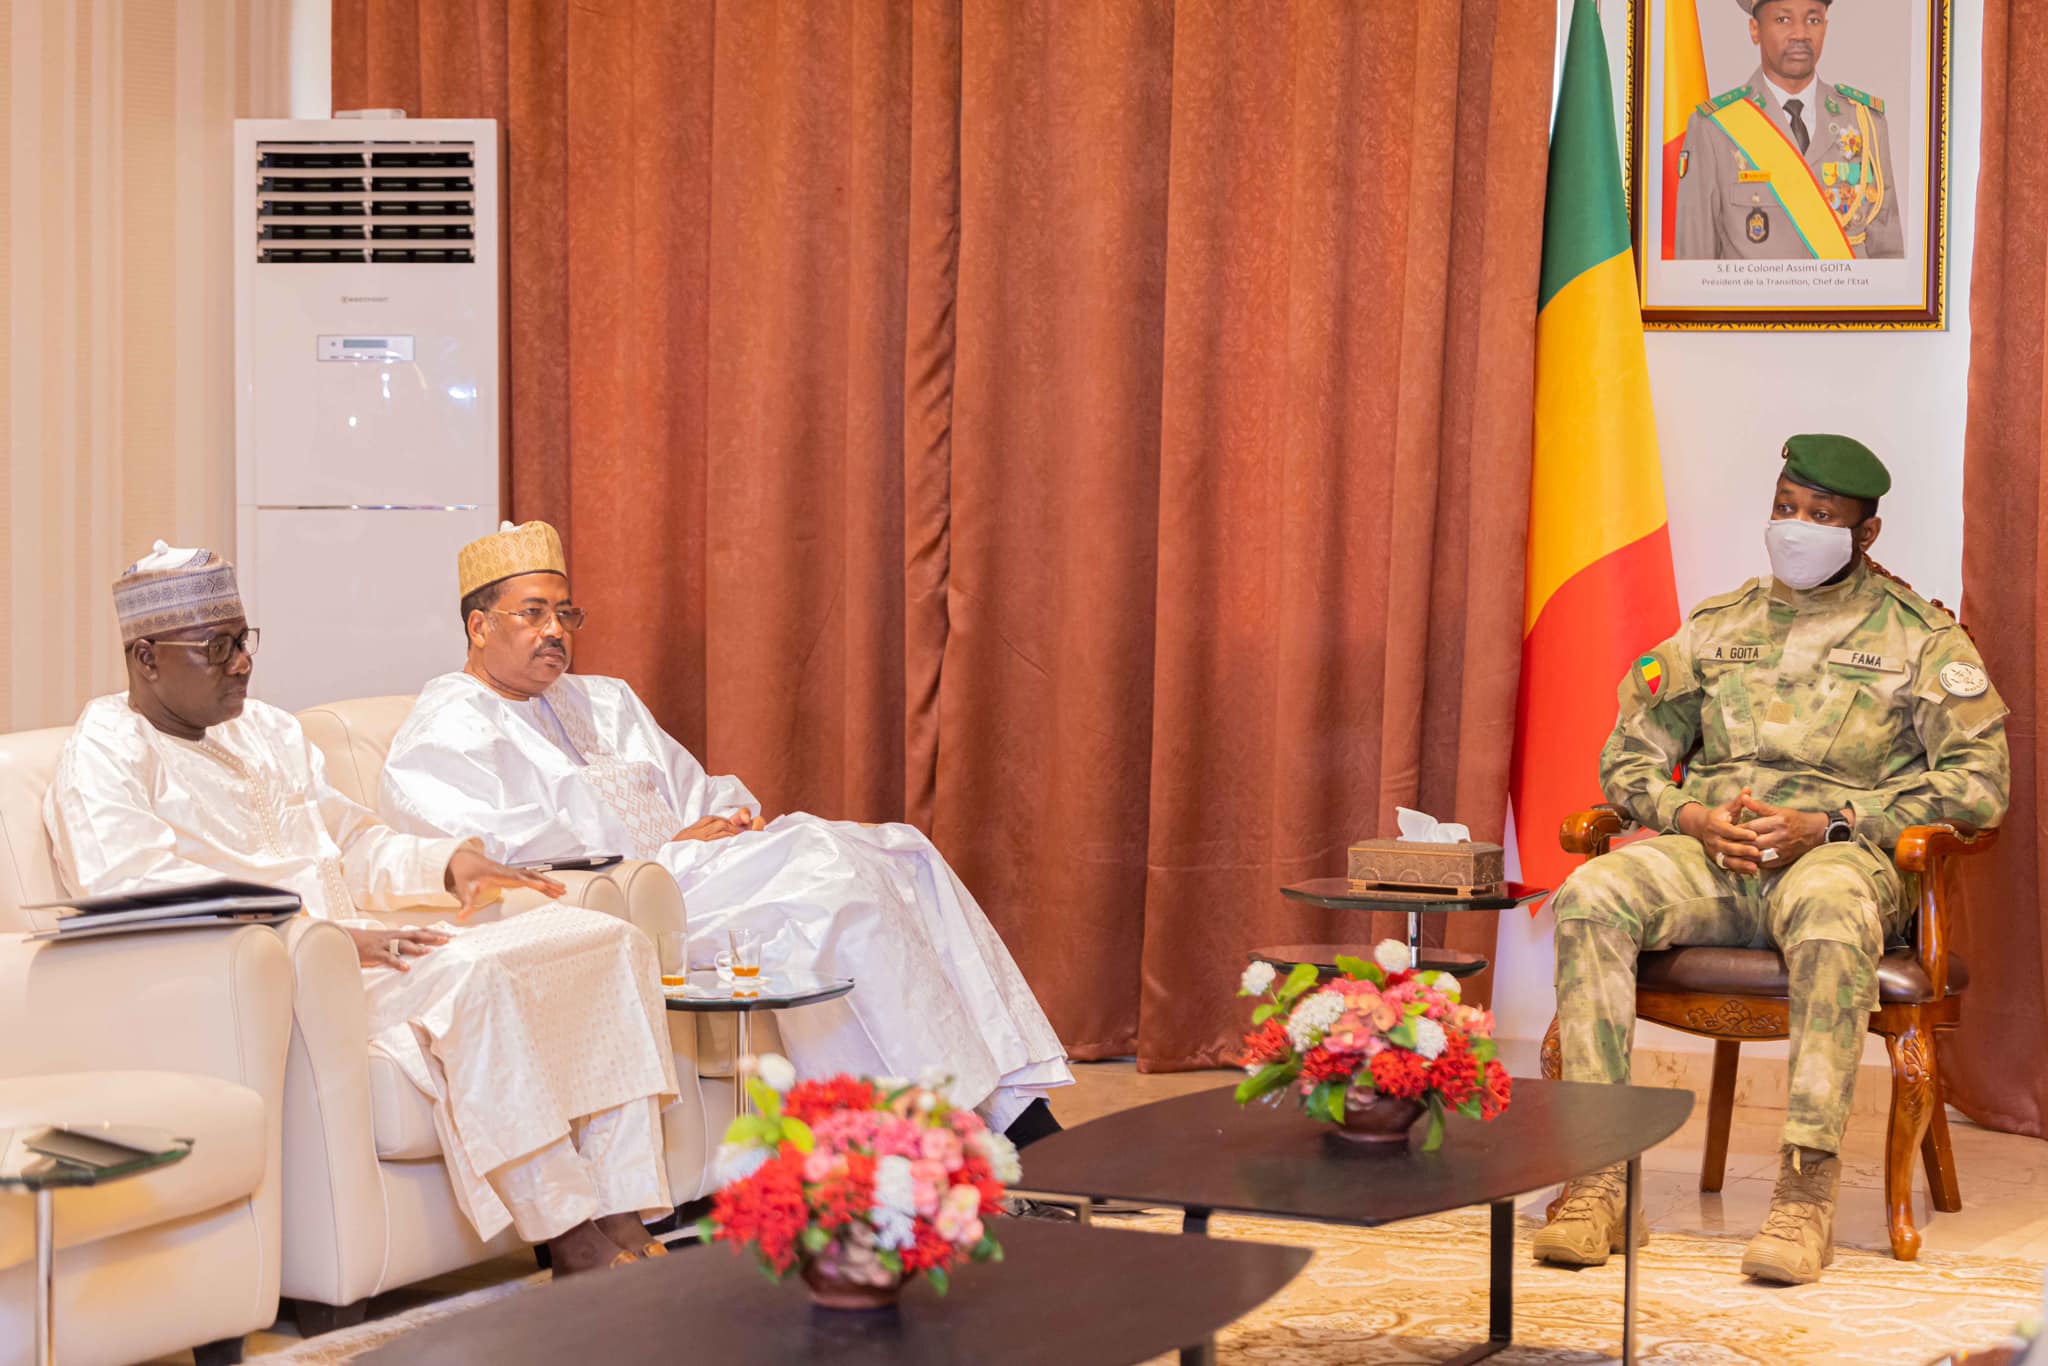 Bamako and Niamey sign an energy partnership agreement